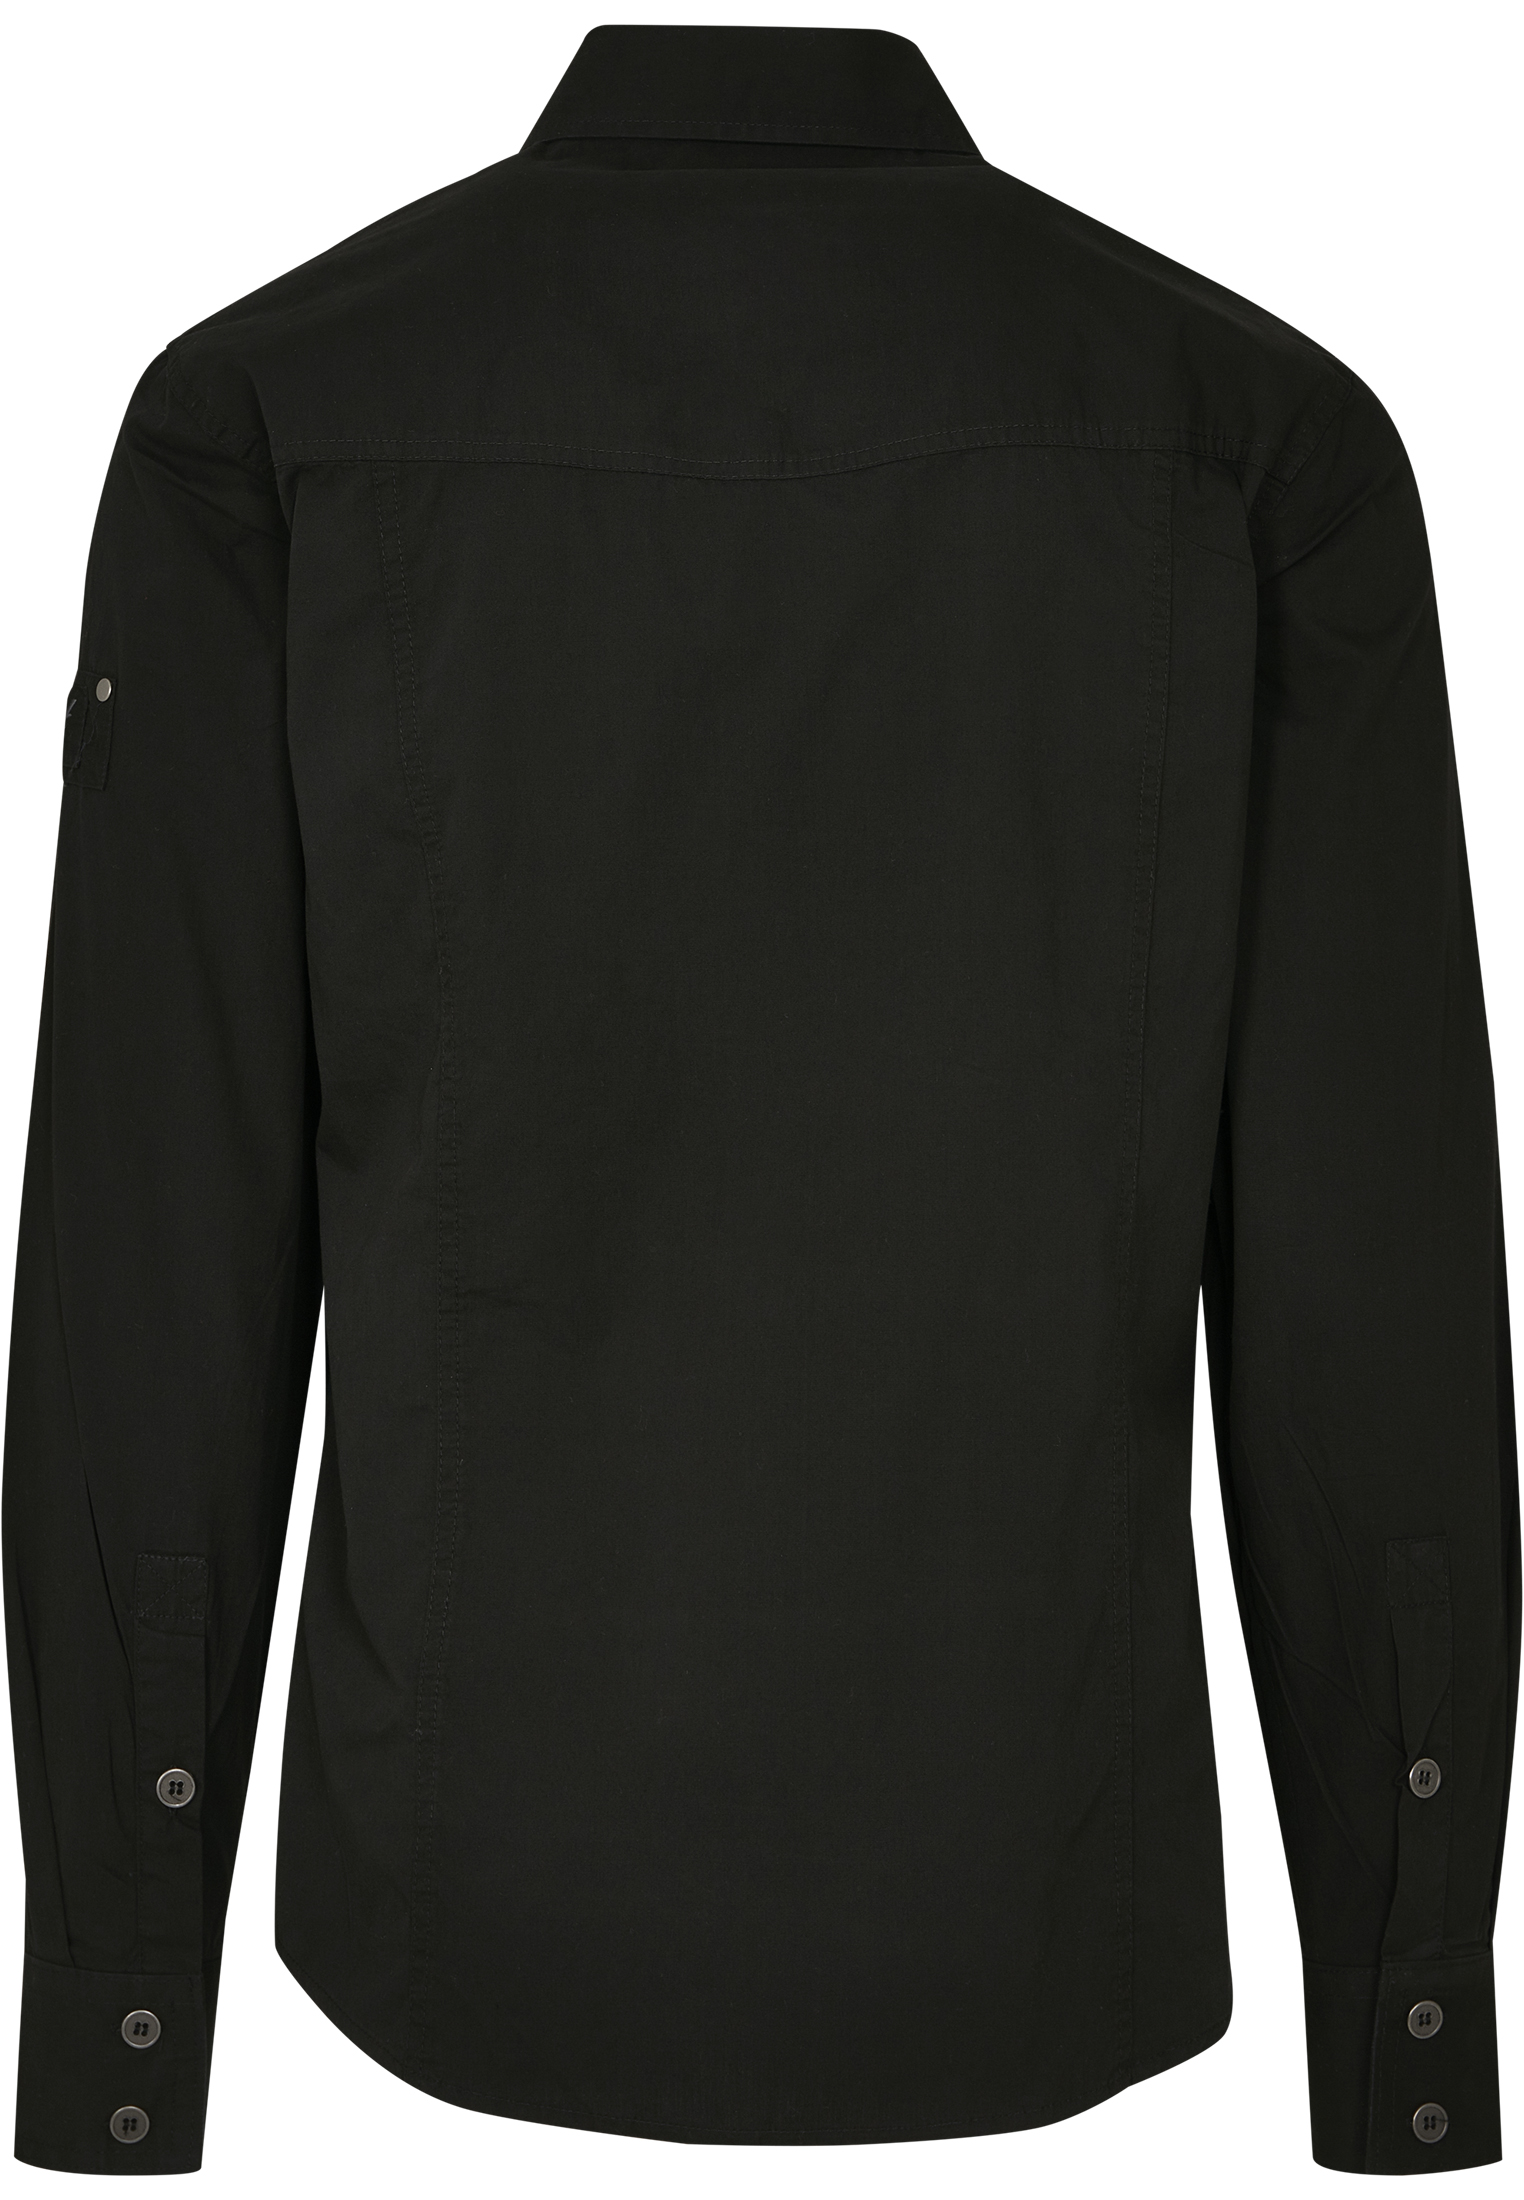 Hemden Slim Worker Shirt in Farbe black